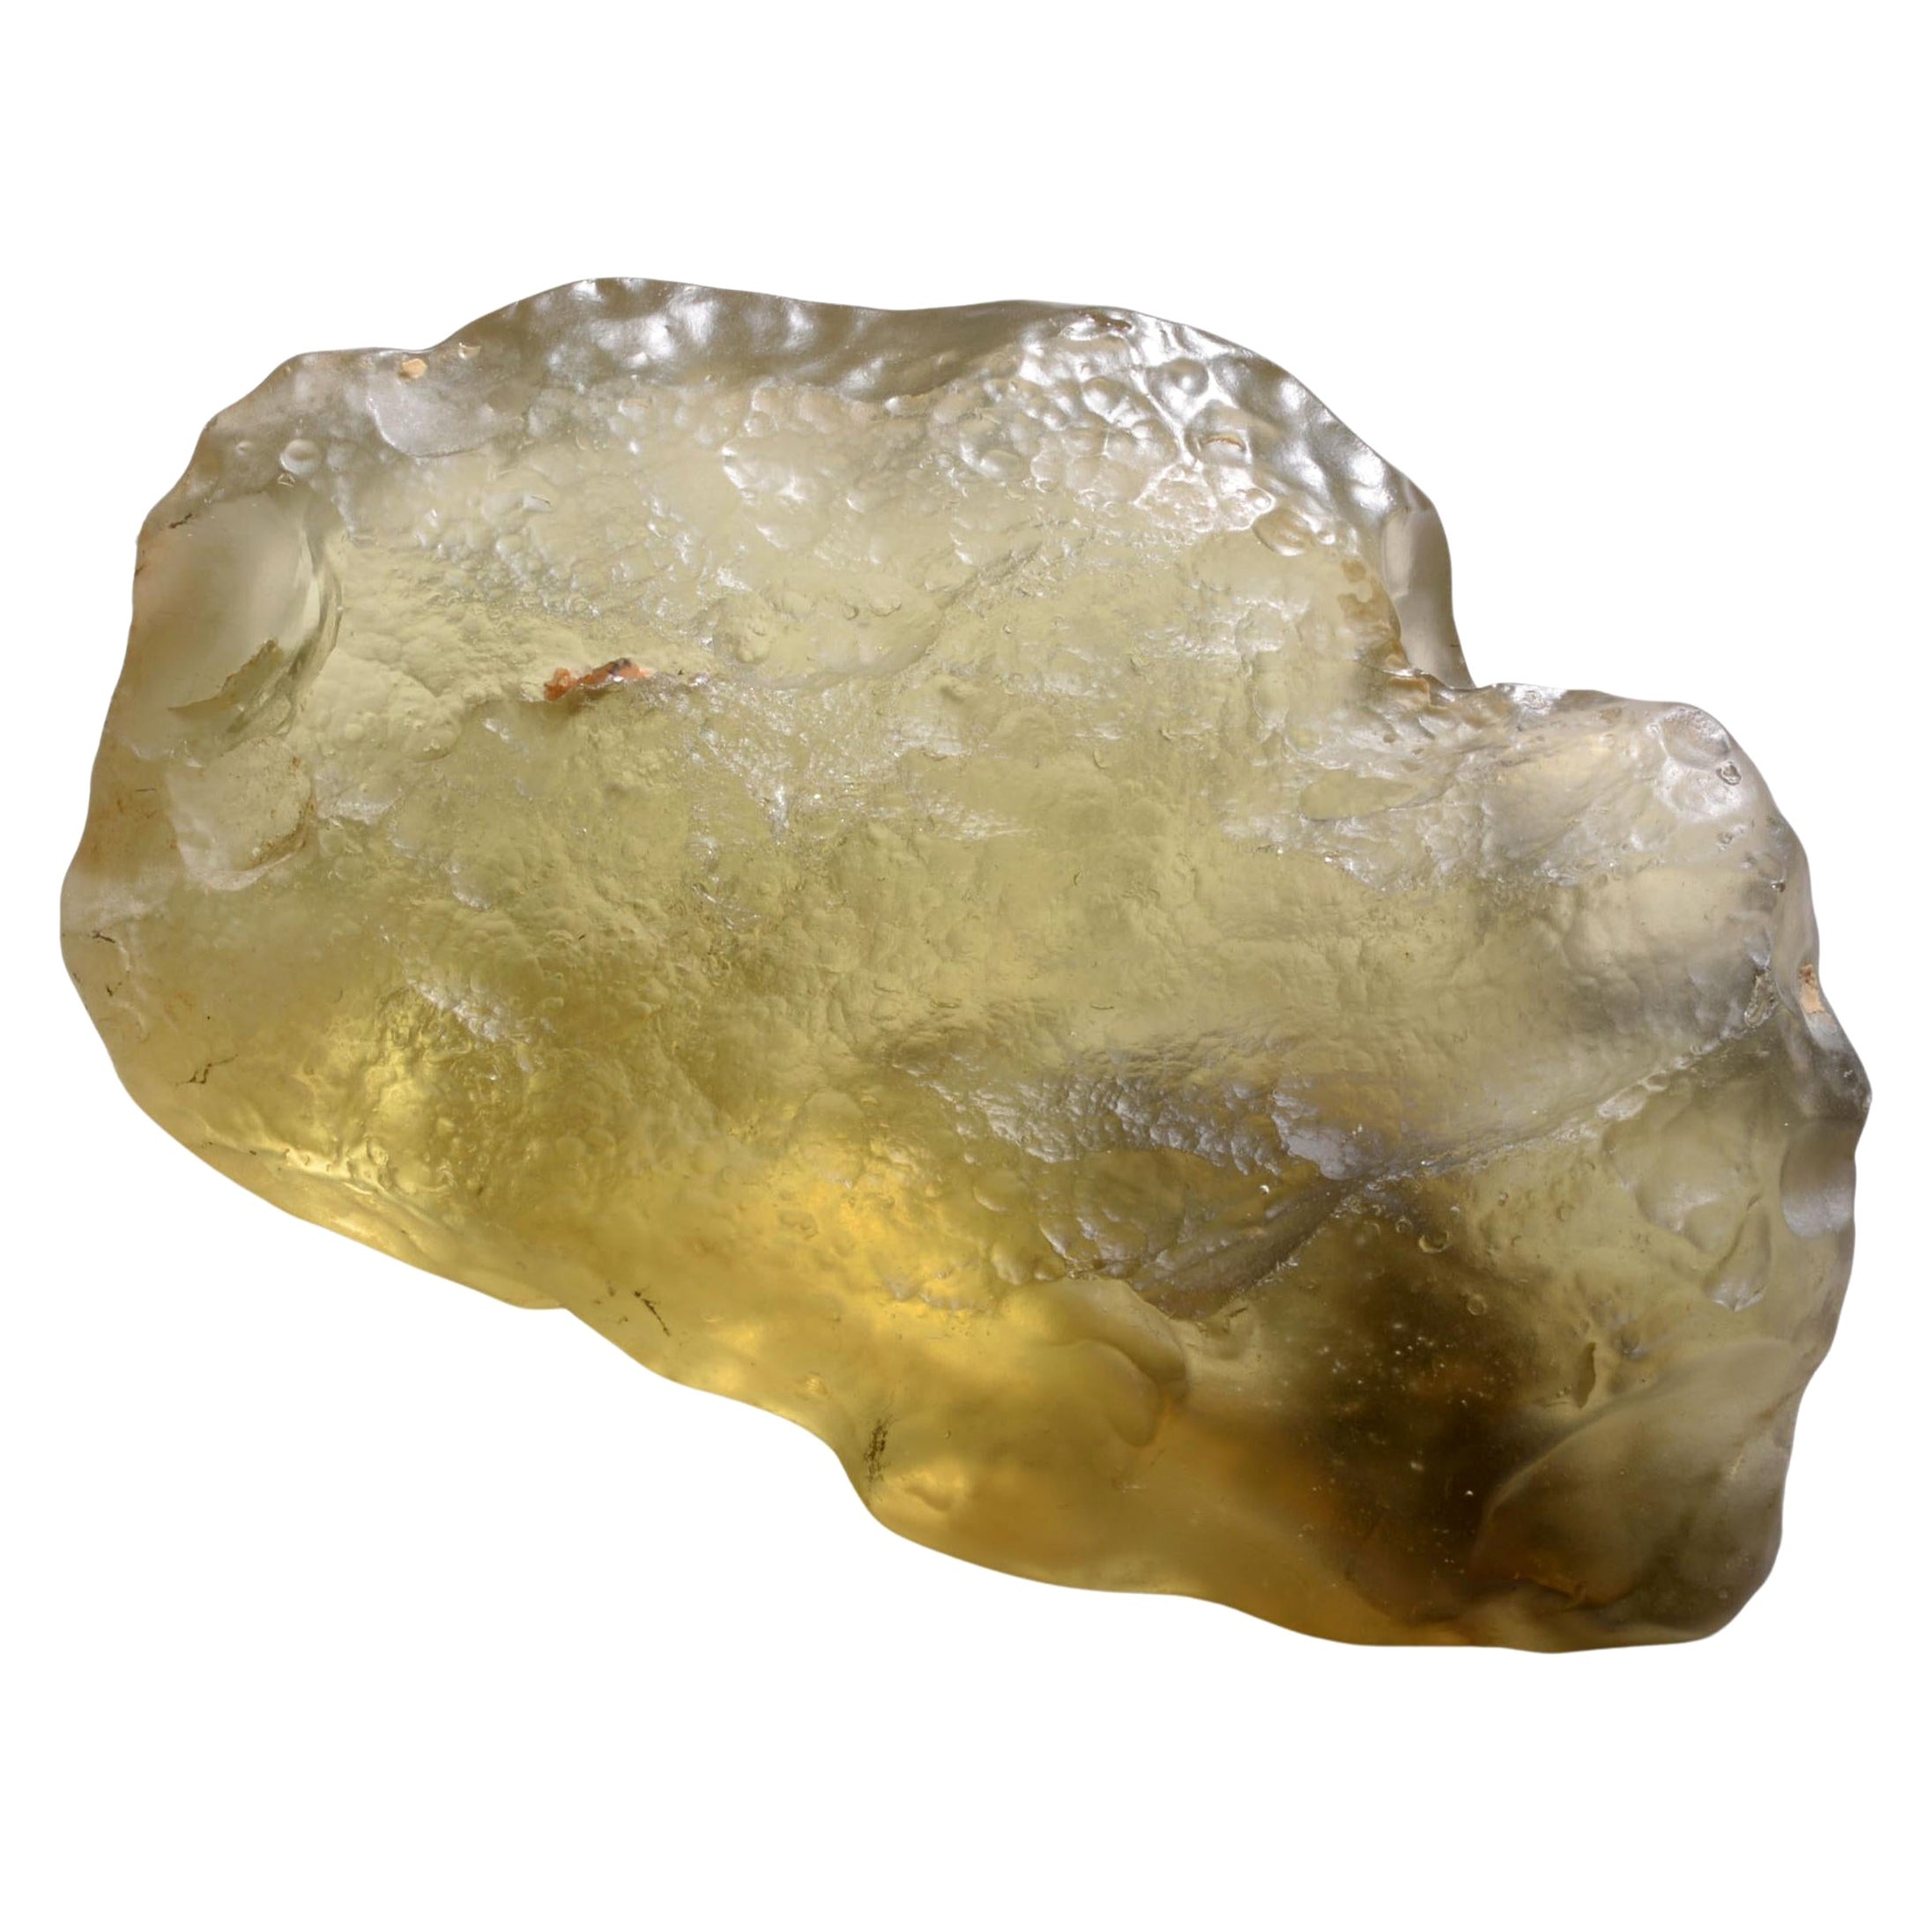 Meteorite Impact Desert Glass For Sale